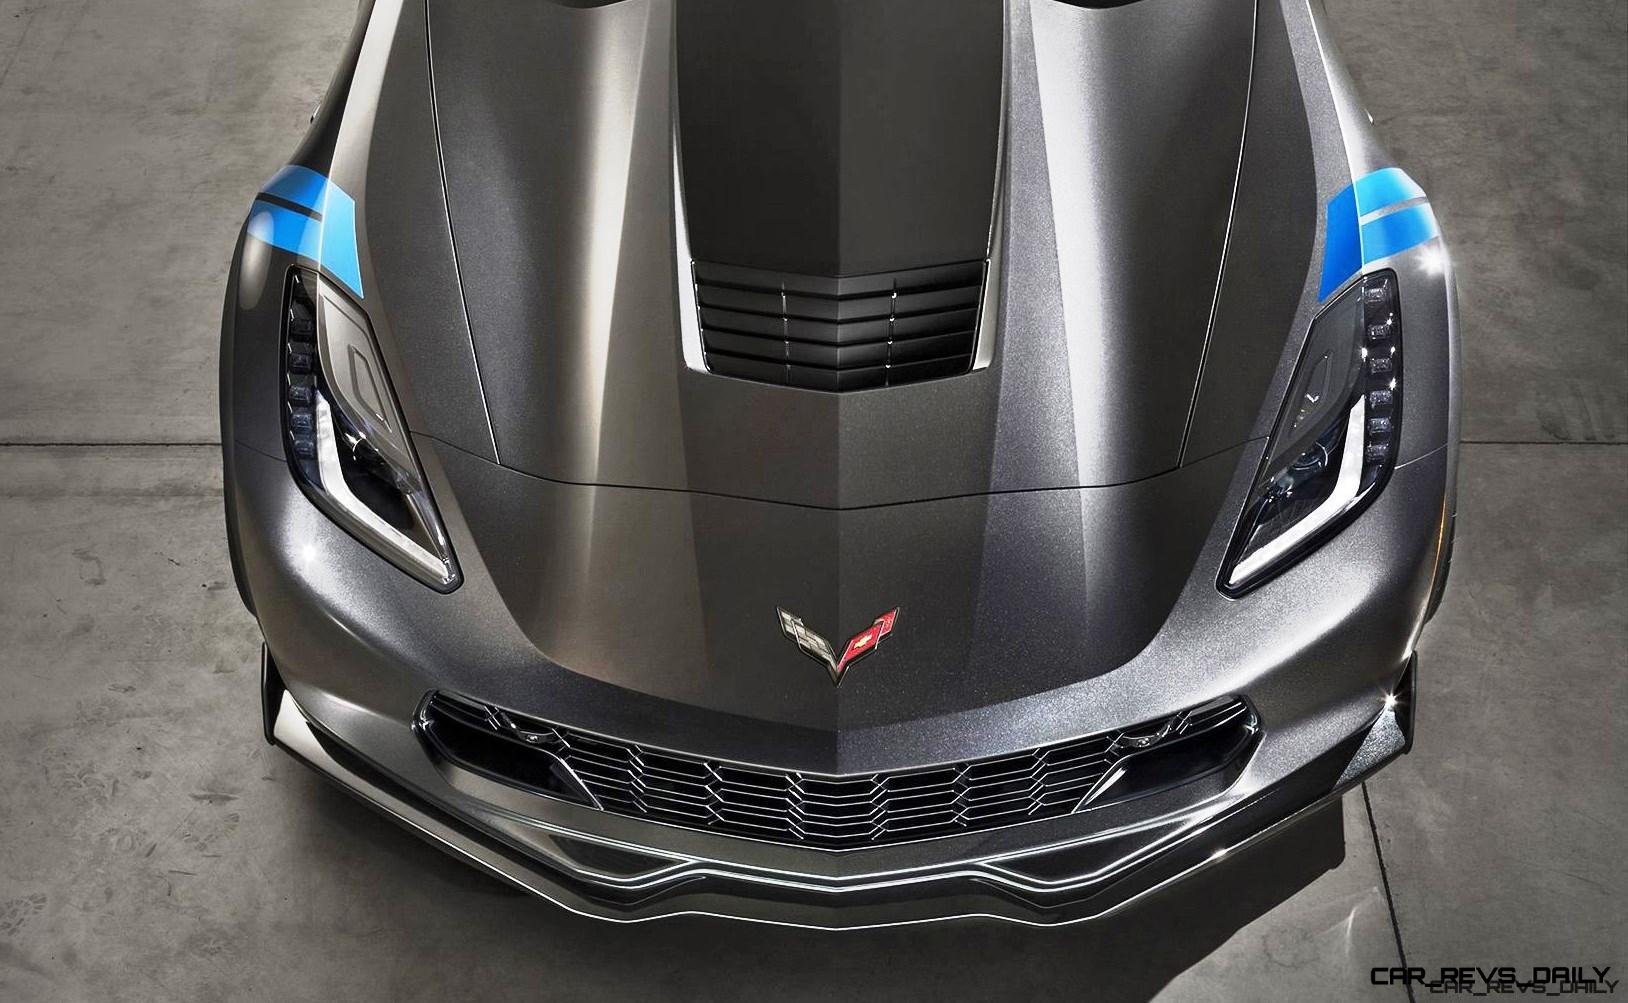 2017-Chevrolet-Corvette-GrandSport-003 copy - Copy